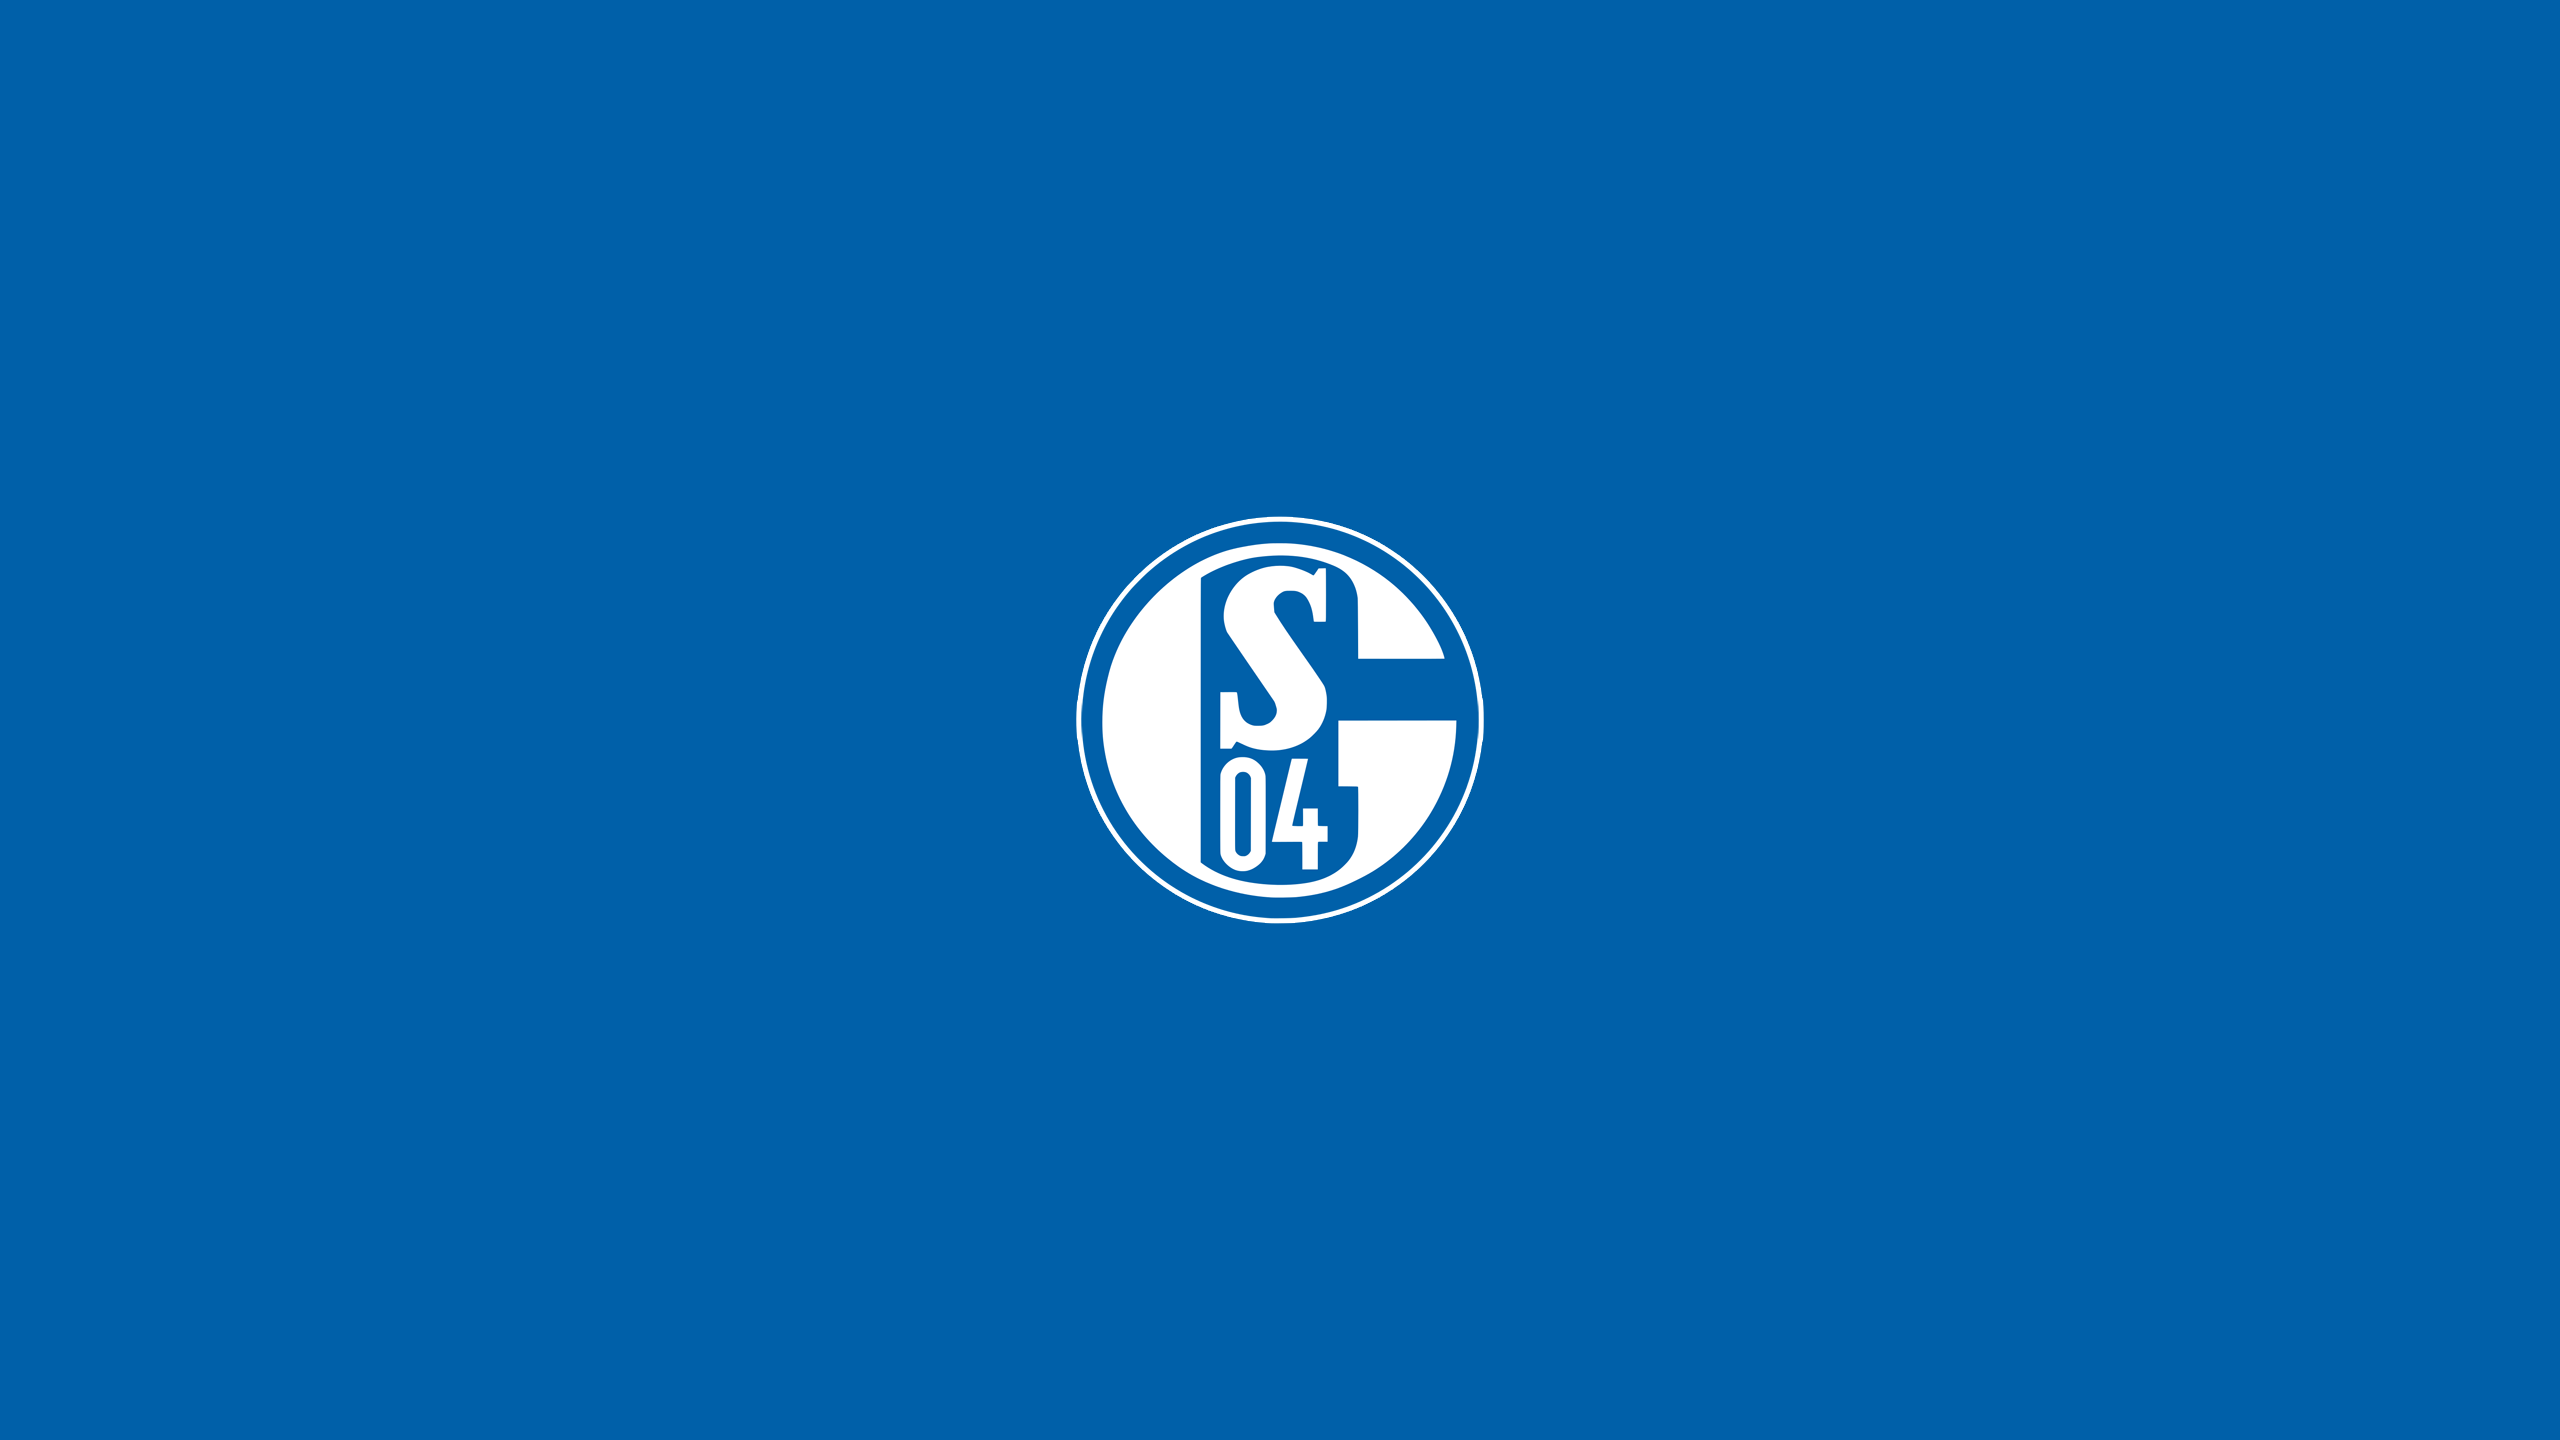 Schalke 04 - Square Bettor